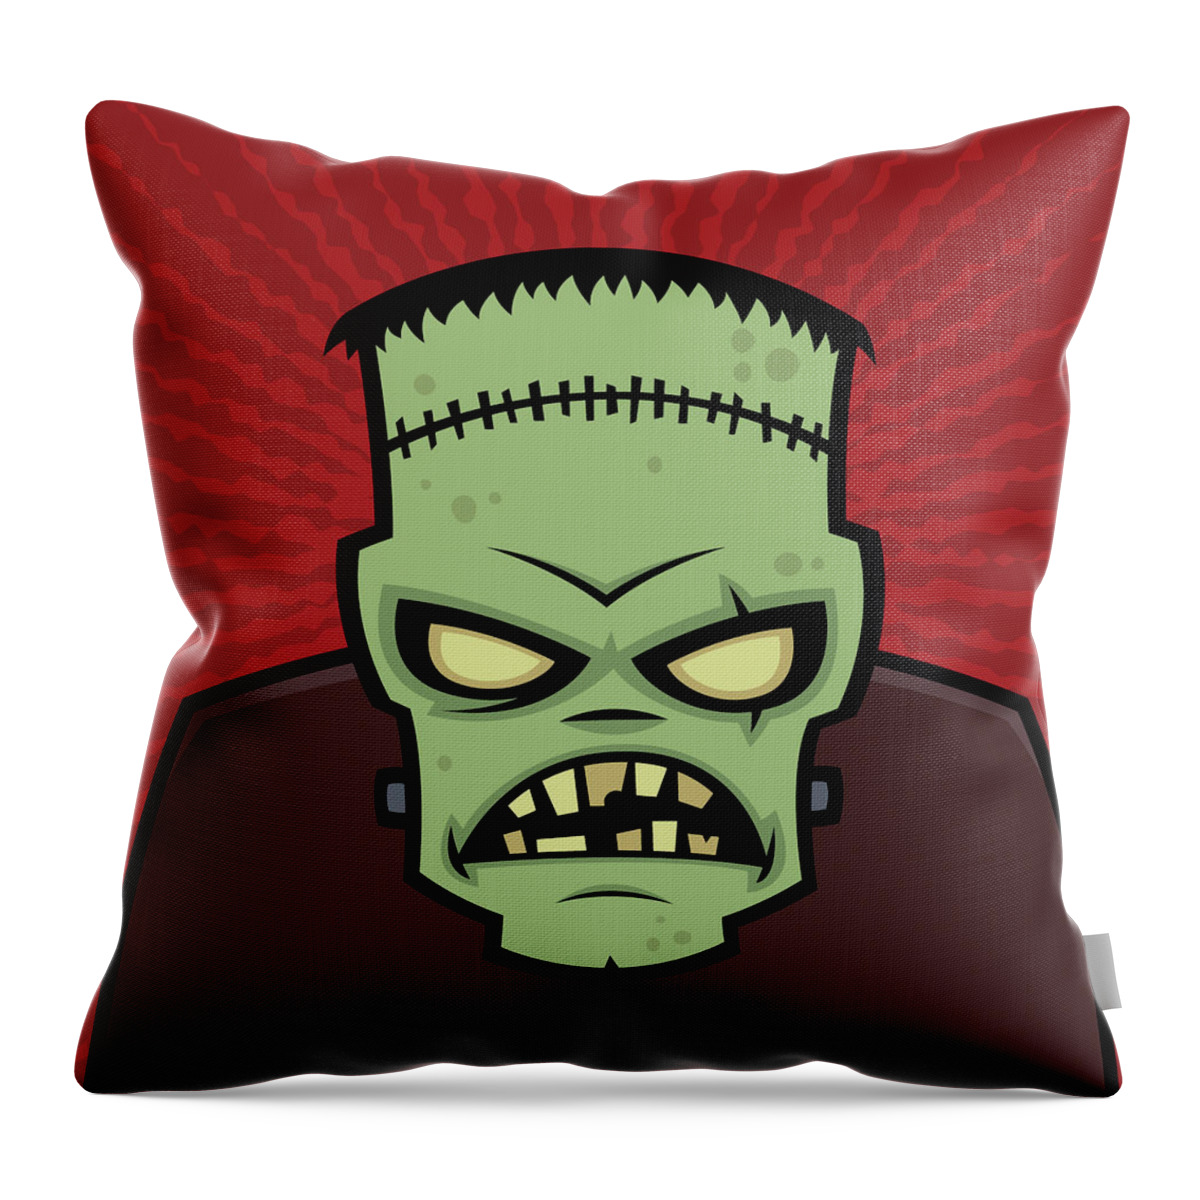 Frankenstein Throw Pillow featuring the digital art Frankenstein Monster by John Schwegel